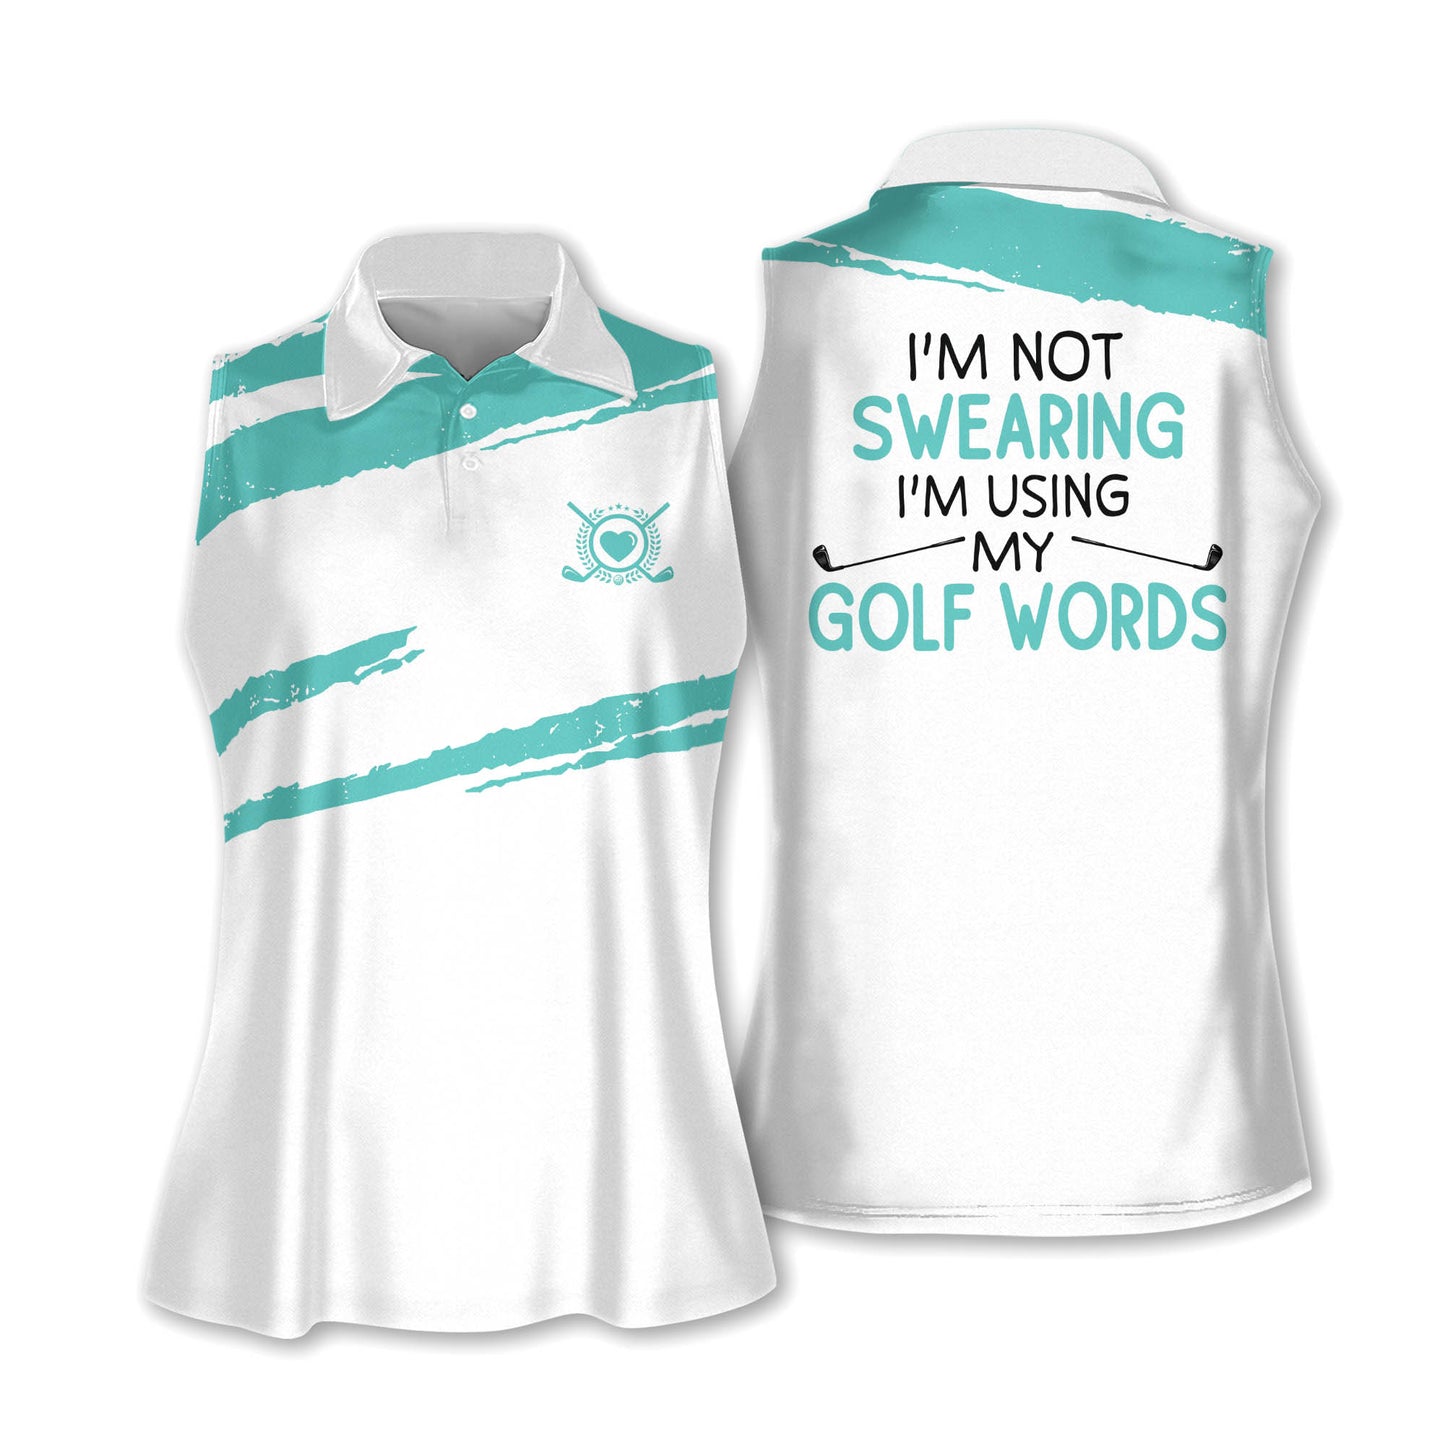 Golf Swearing Colorfun Sleeveless Shirt I0323